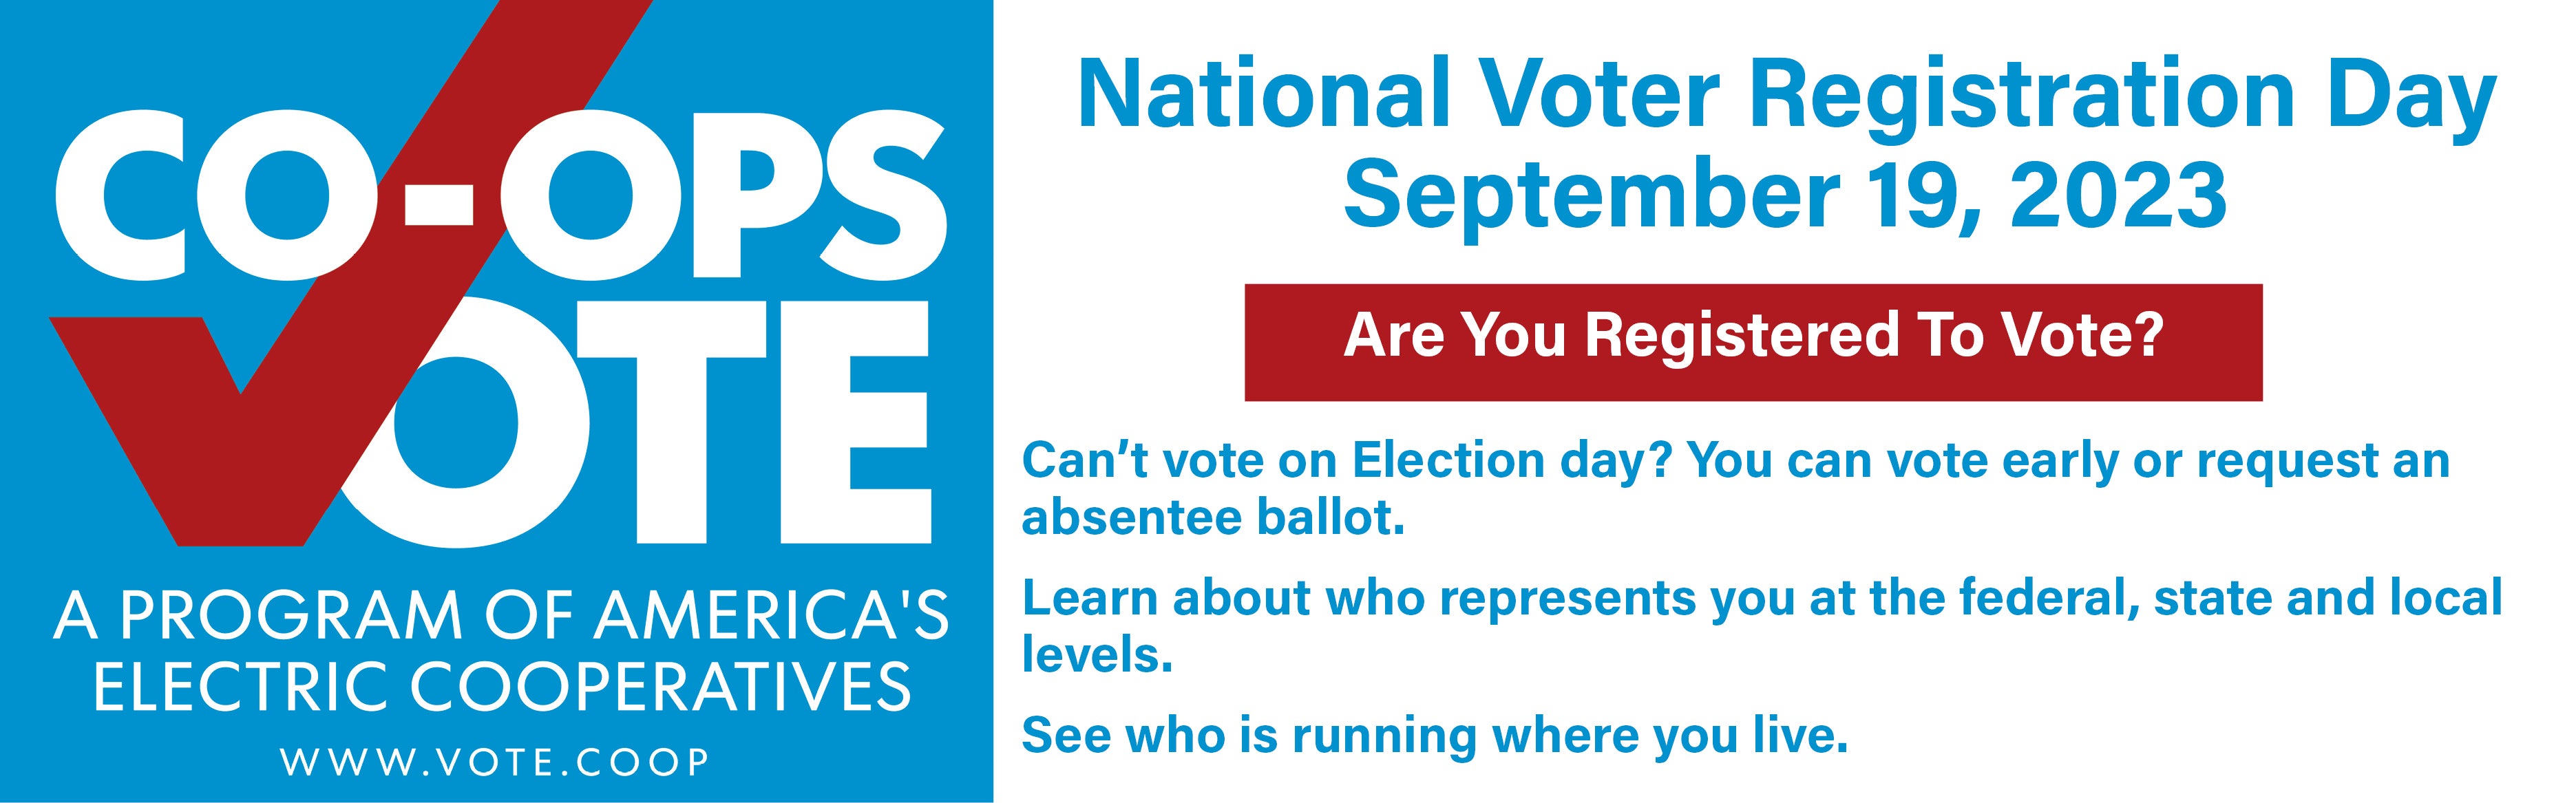 Co-ops Vote - National Registration Day